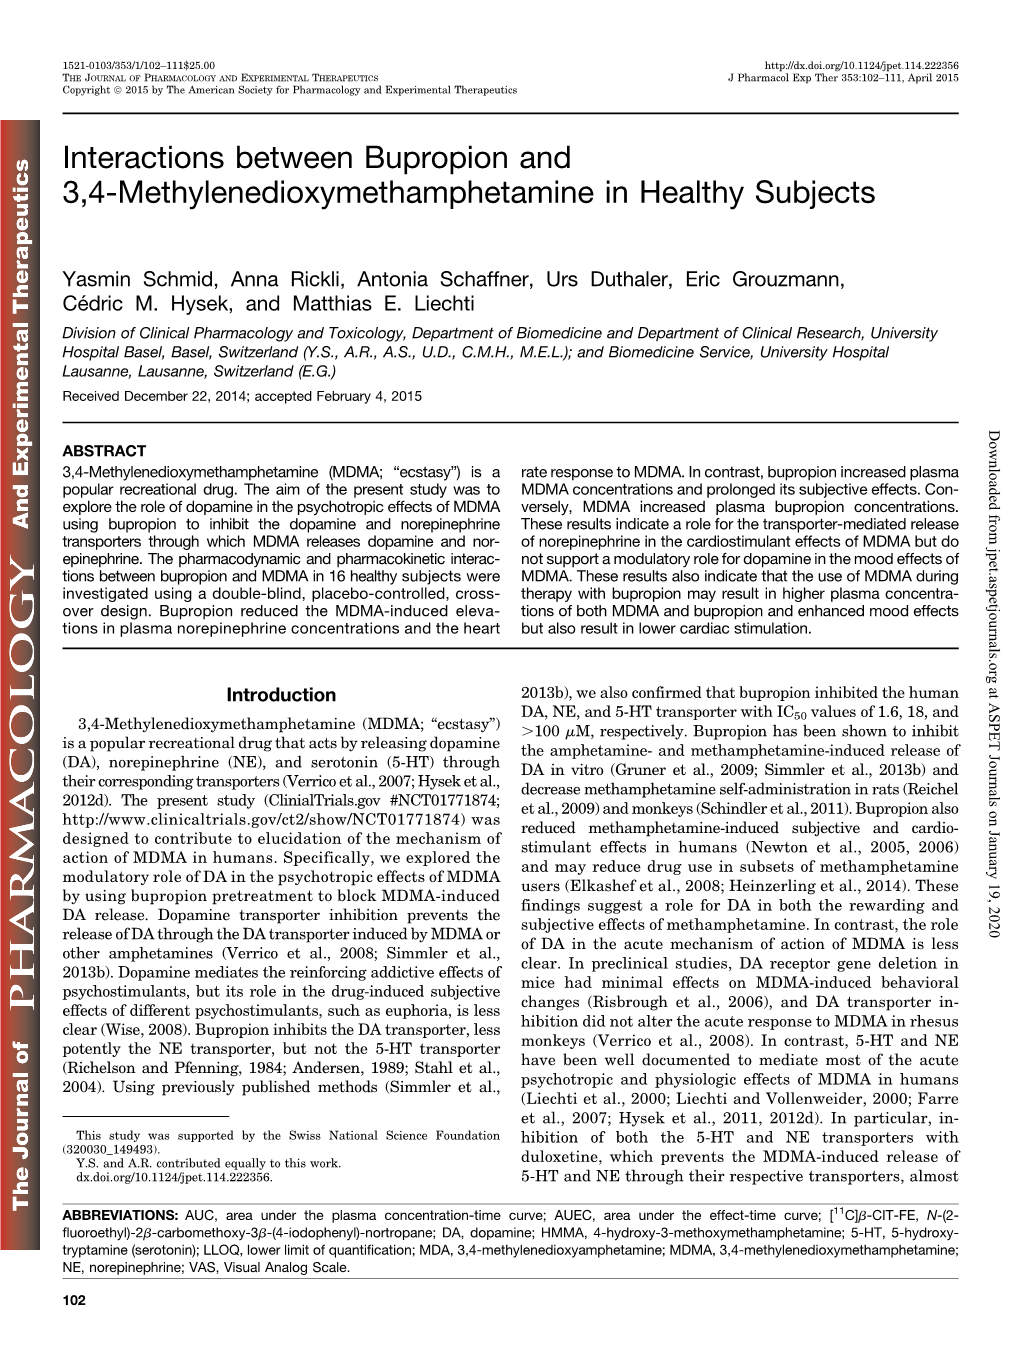 Interactions Between Bupropion and 3,4-Methylenedioxymethamphetamine in Healthy Subjects